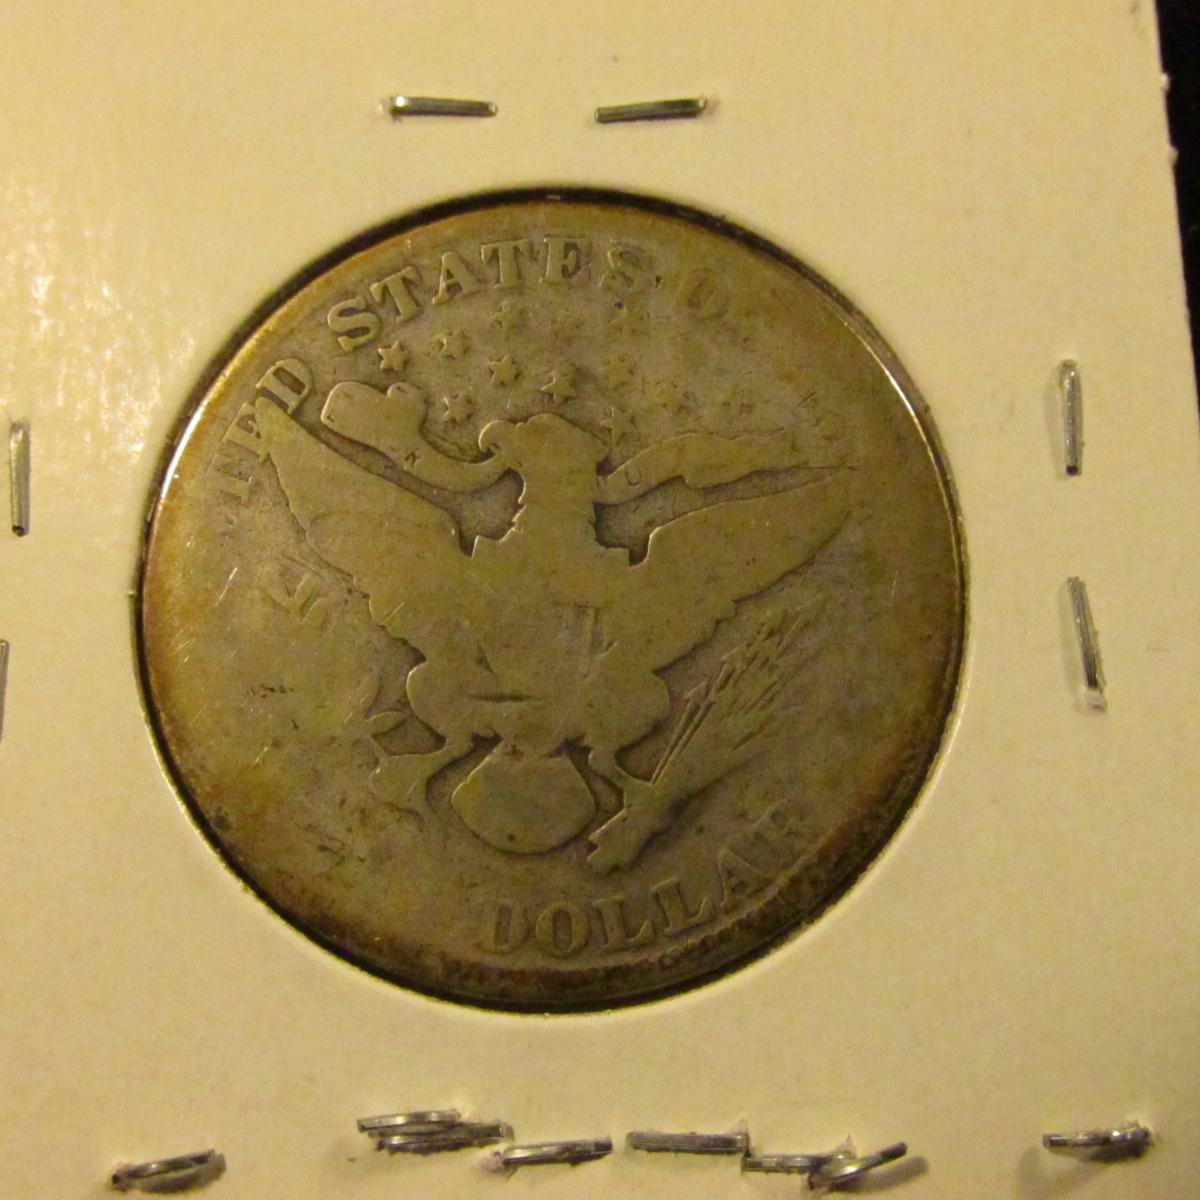 951 . 1905-S Barber Half Dollar, G obverse, AG reverse, G value $16